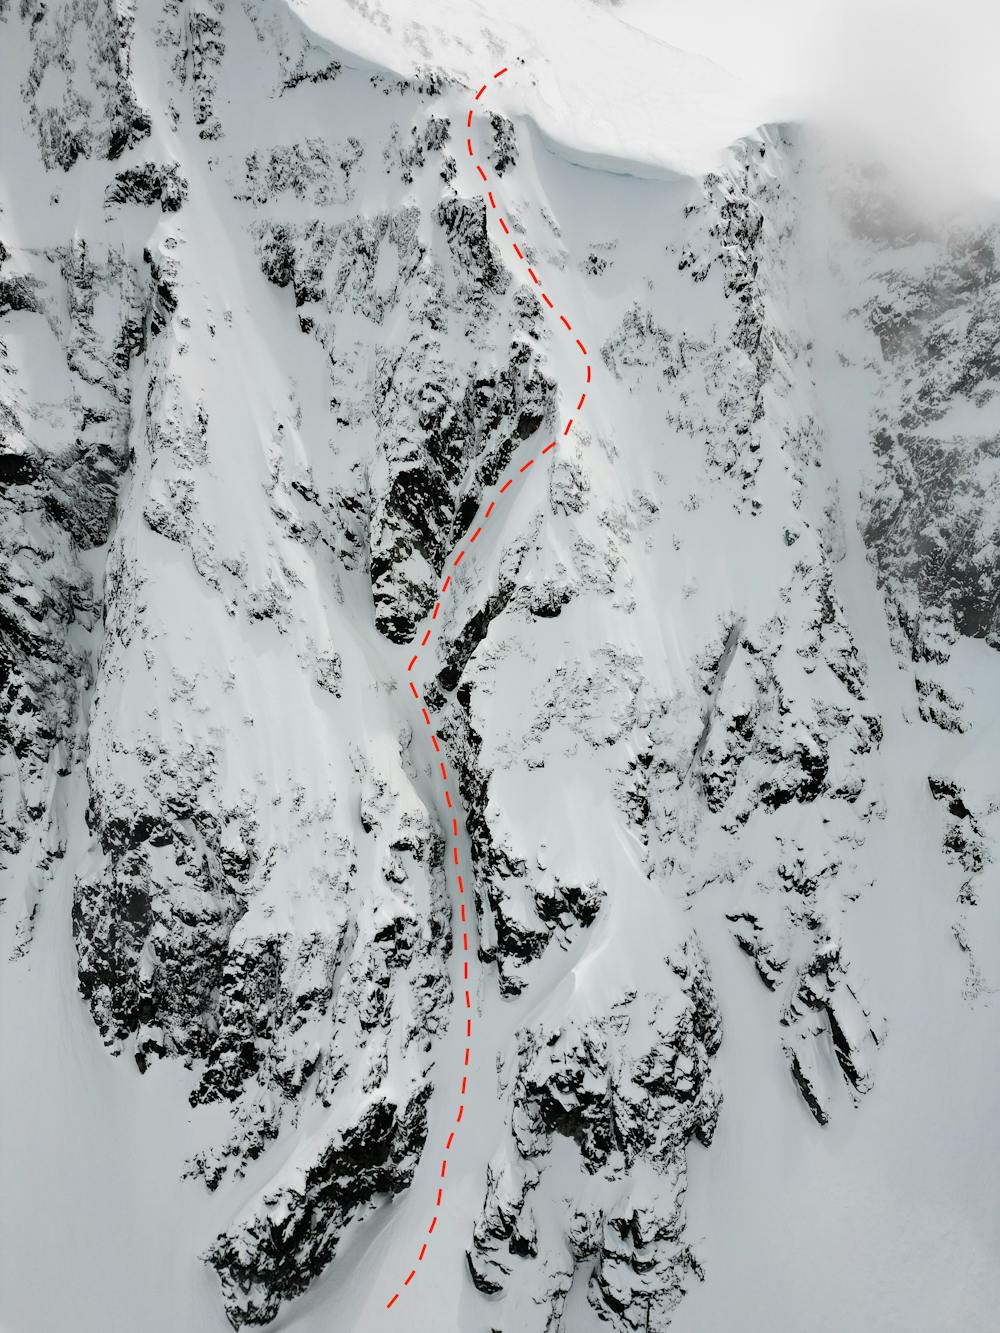 Topo photo of the route.